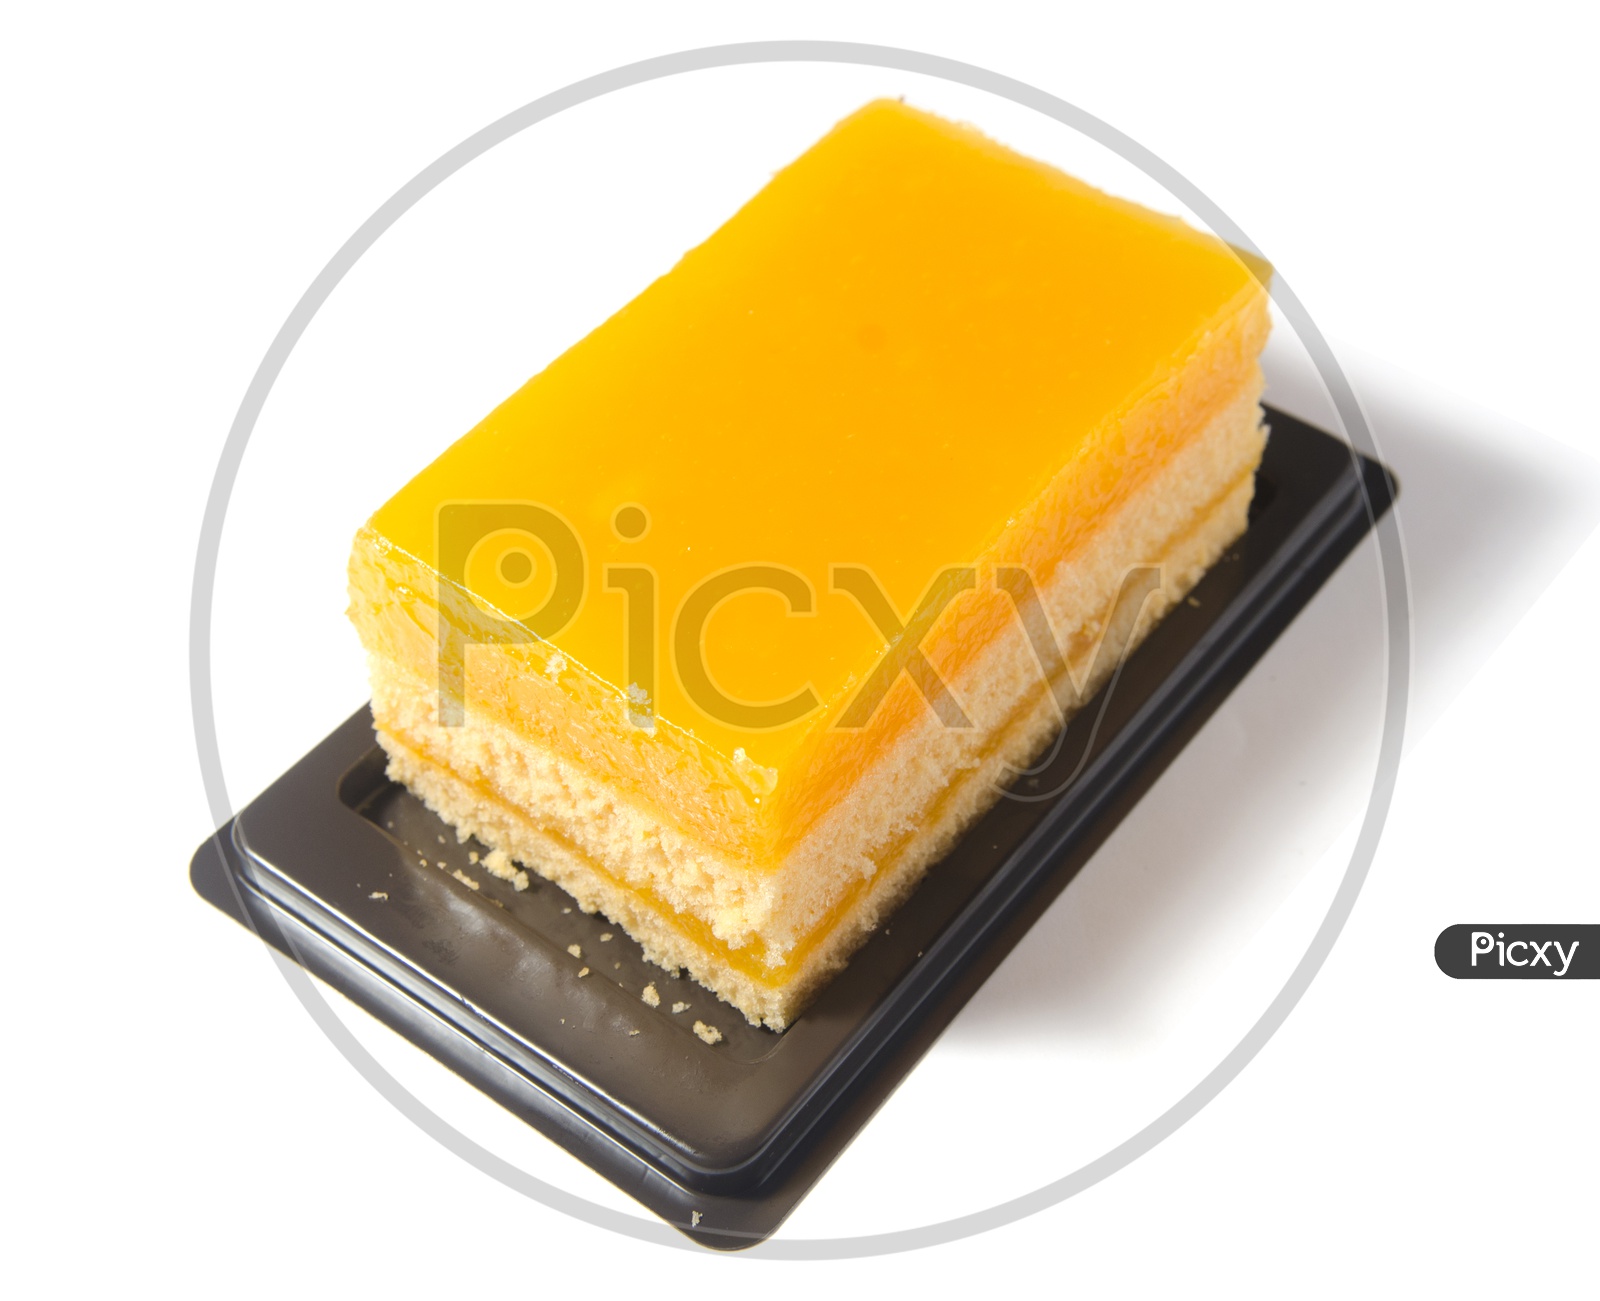 An orange cheesecake